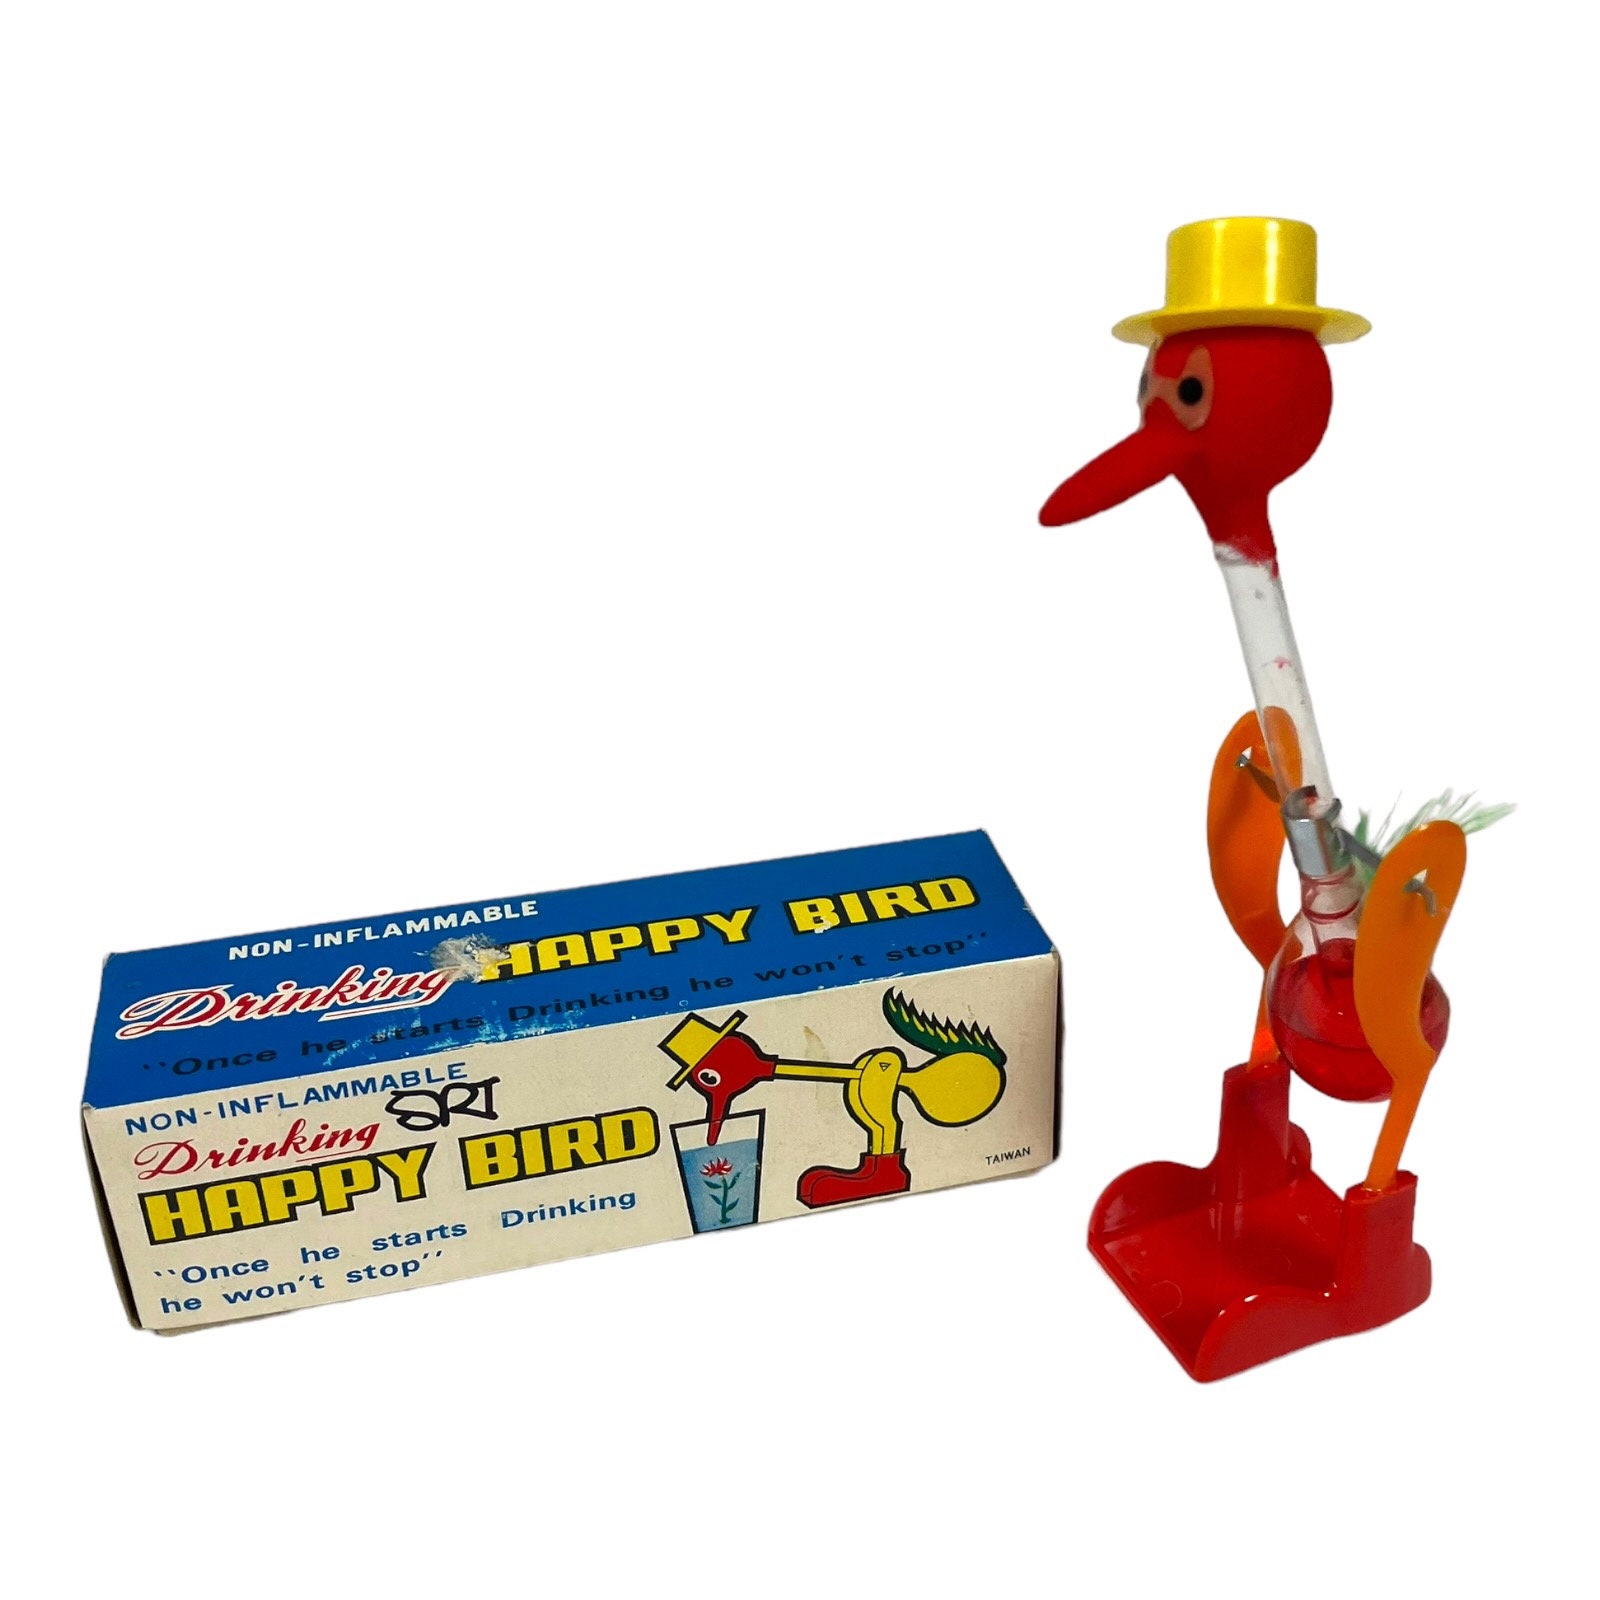 Drinking Bird - The Toy Box